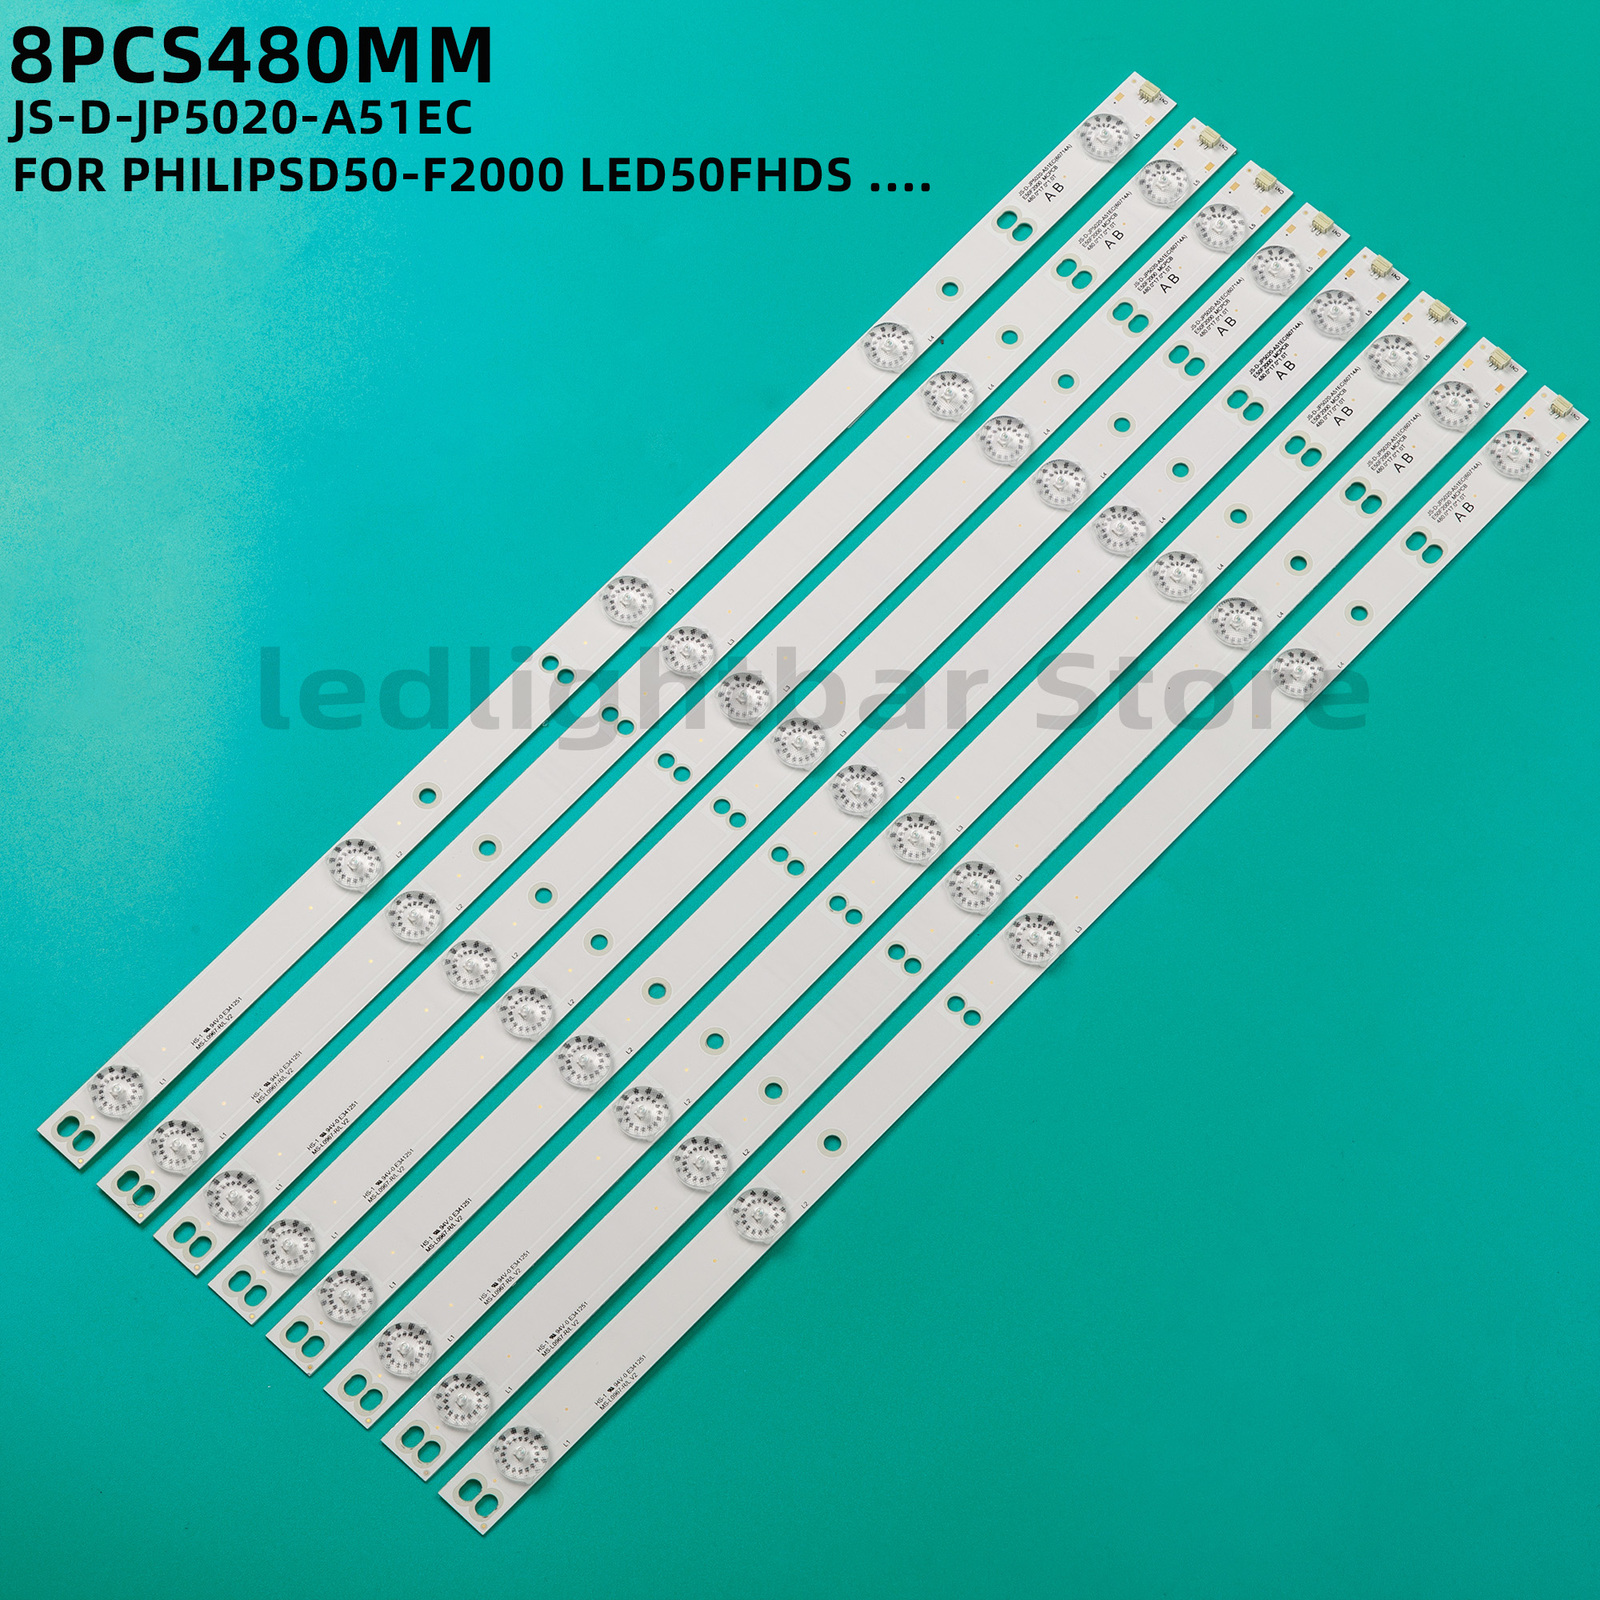 8pcs 480mm Led Backlight Strips 5lamps  For PHILIPS D50-F2000 B51EC D50-F2000 LE